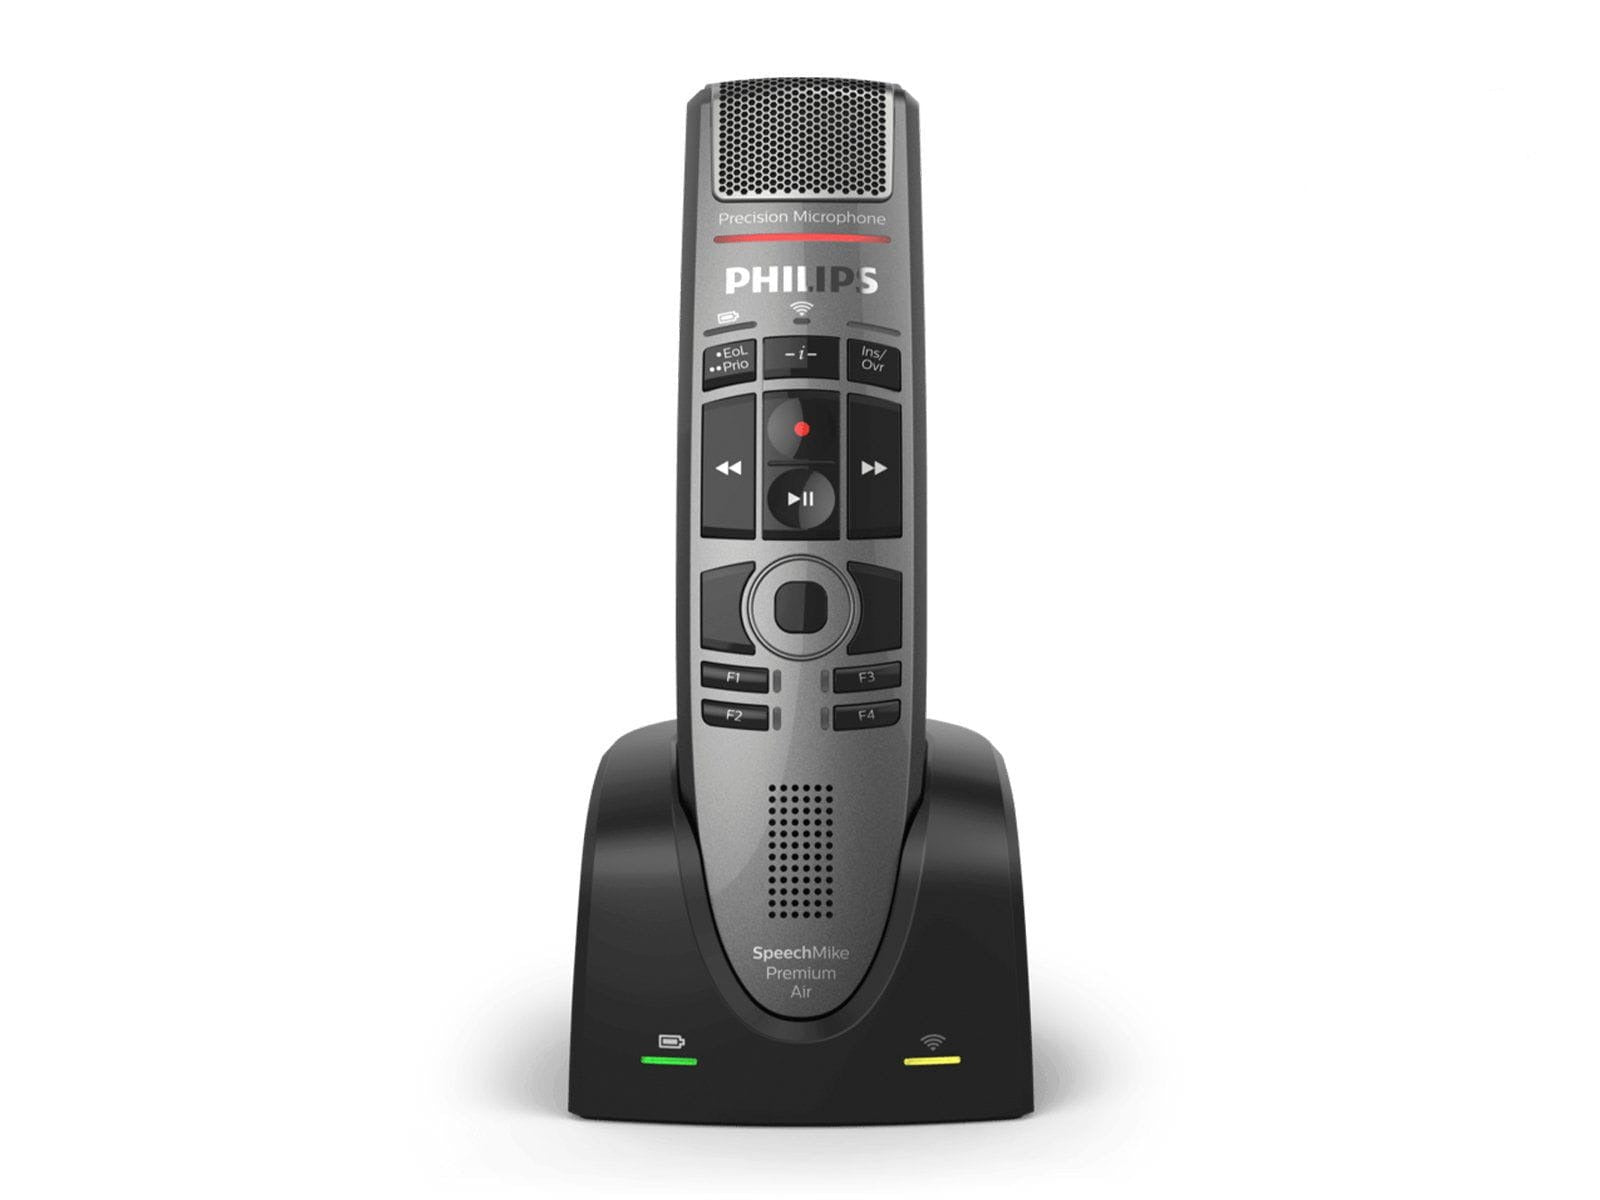 Philips SpeechMike Premium Air Kabelloses Drucktasten-Diktiermikrofon (SMP4000) Monitors.com